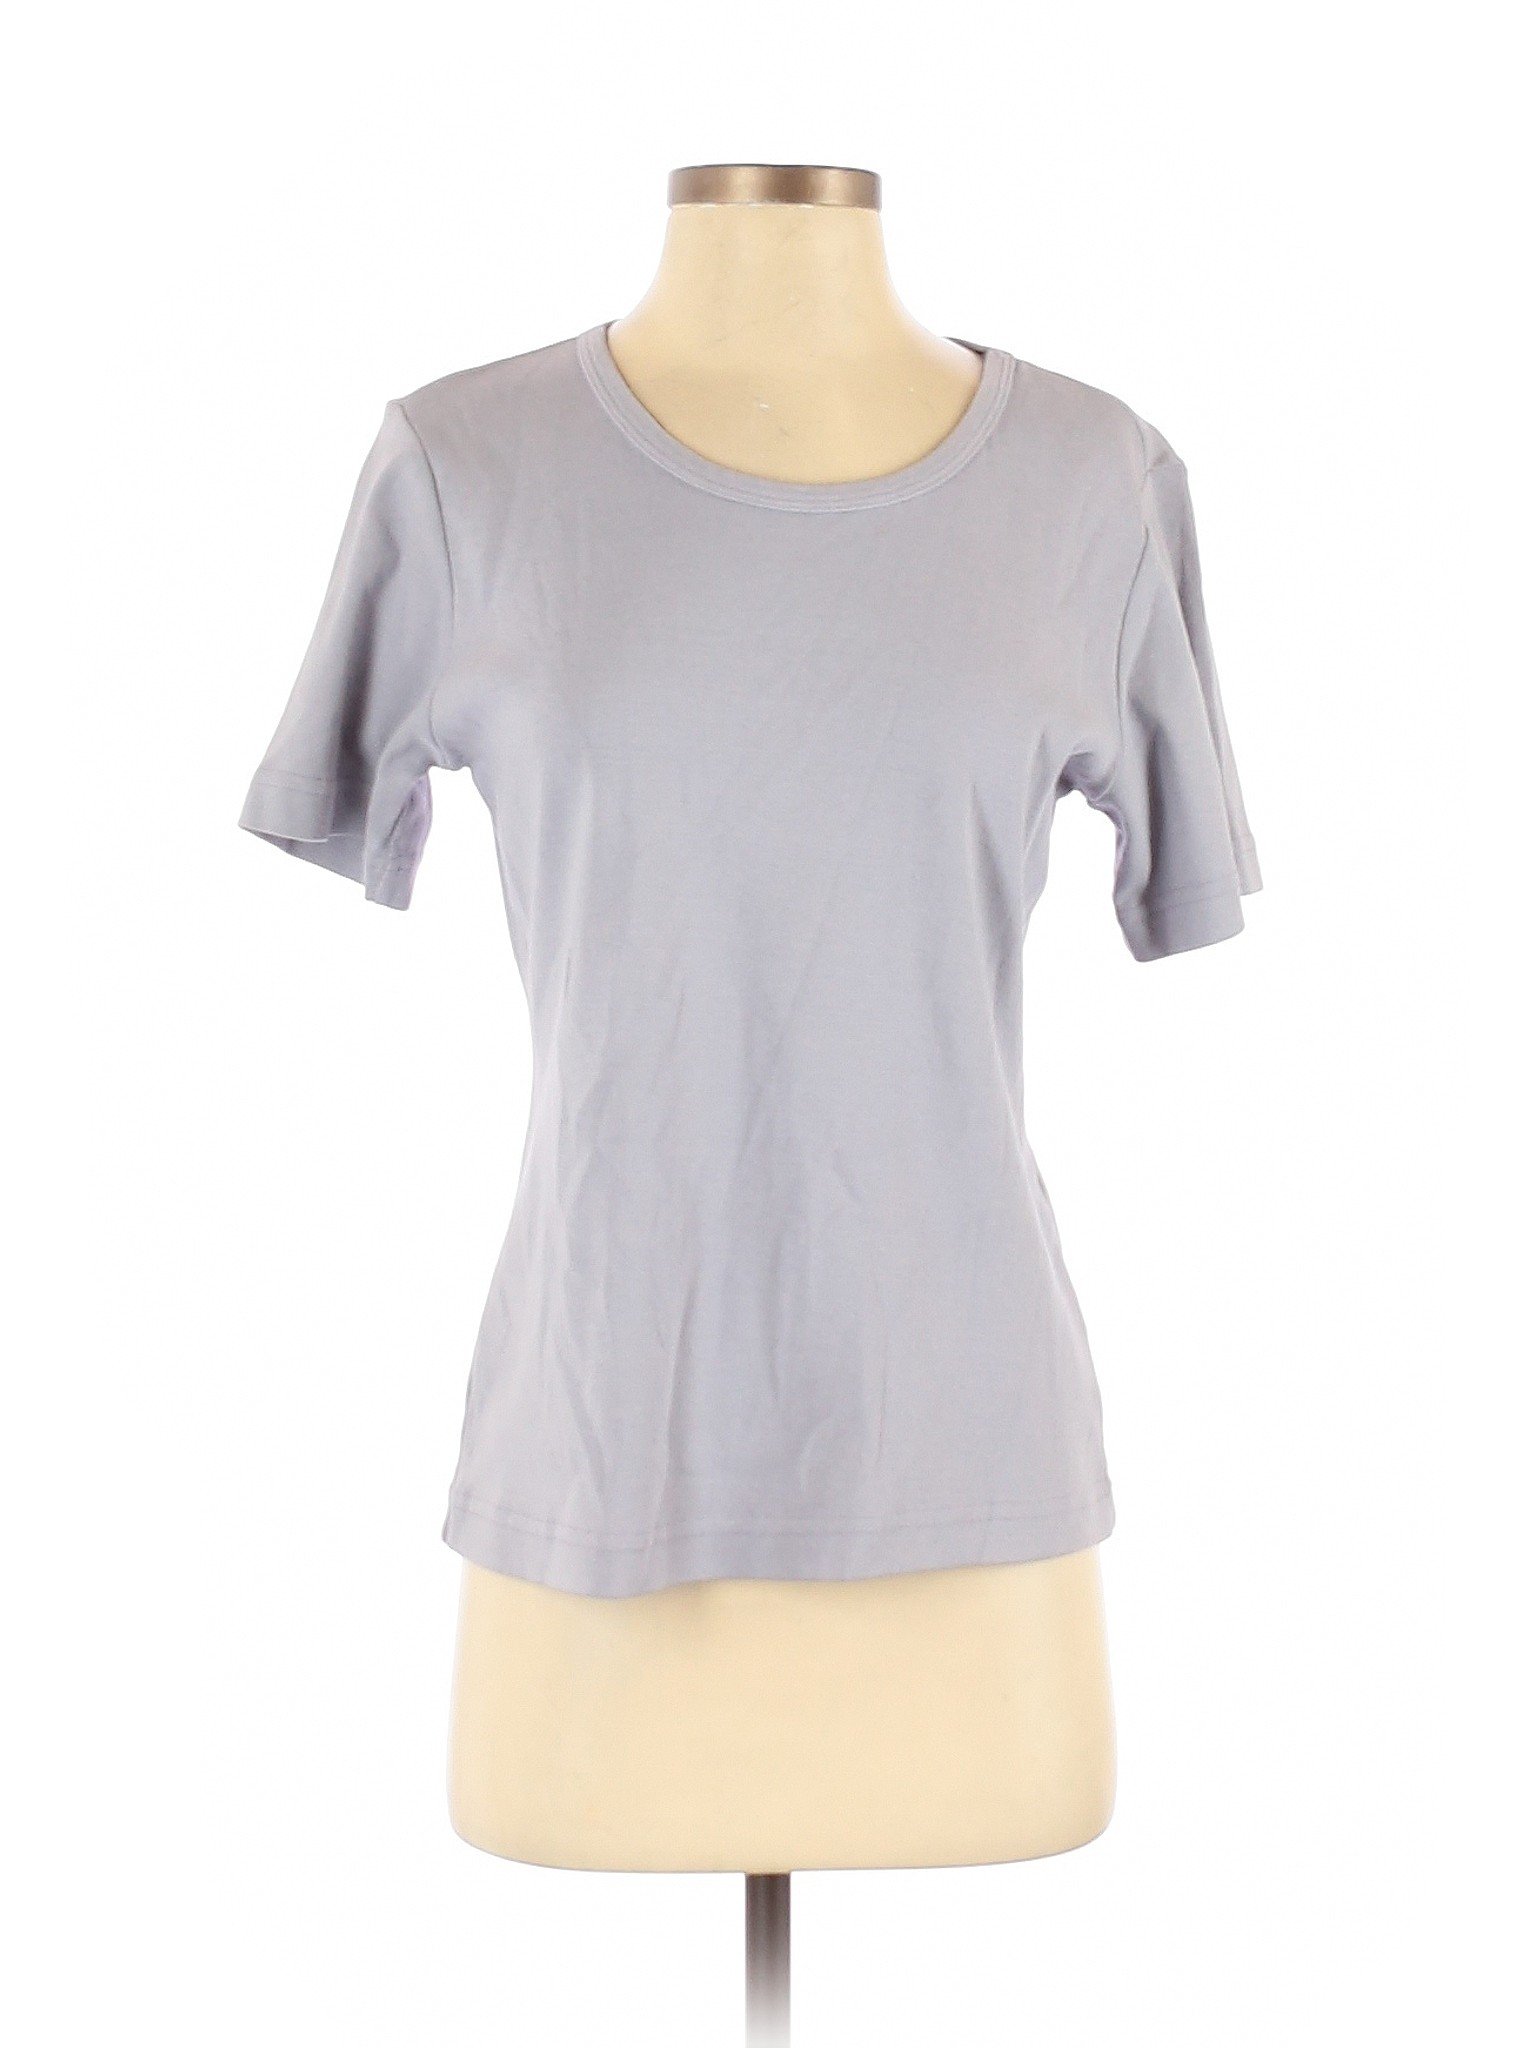 Only Women Purple Short Sleeve T-Shirt S | eBay